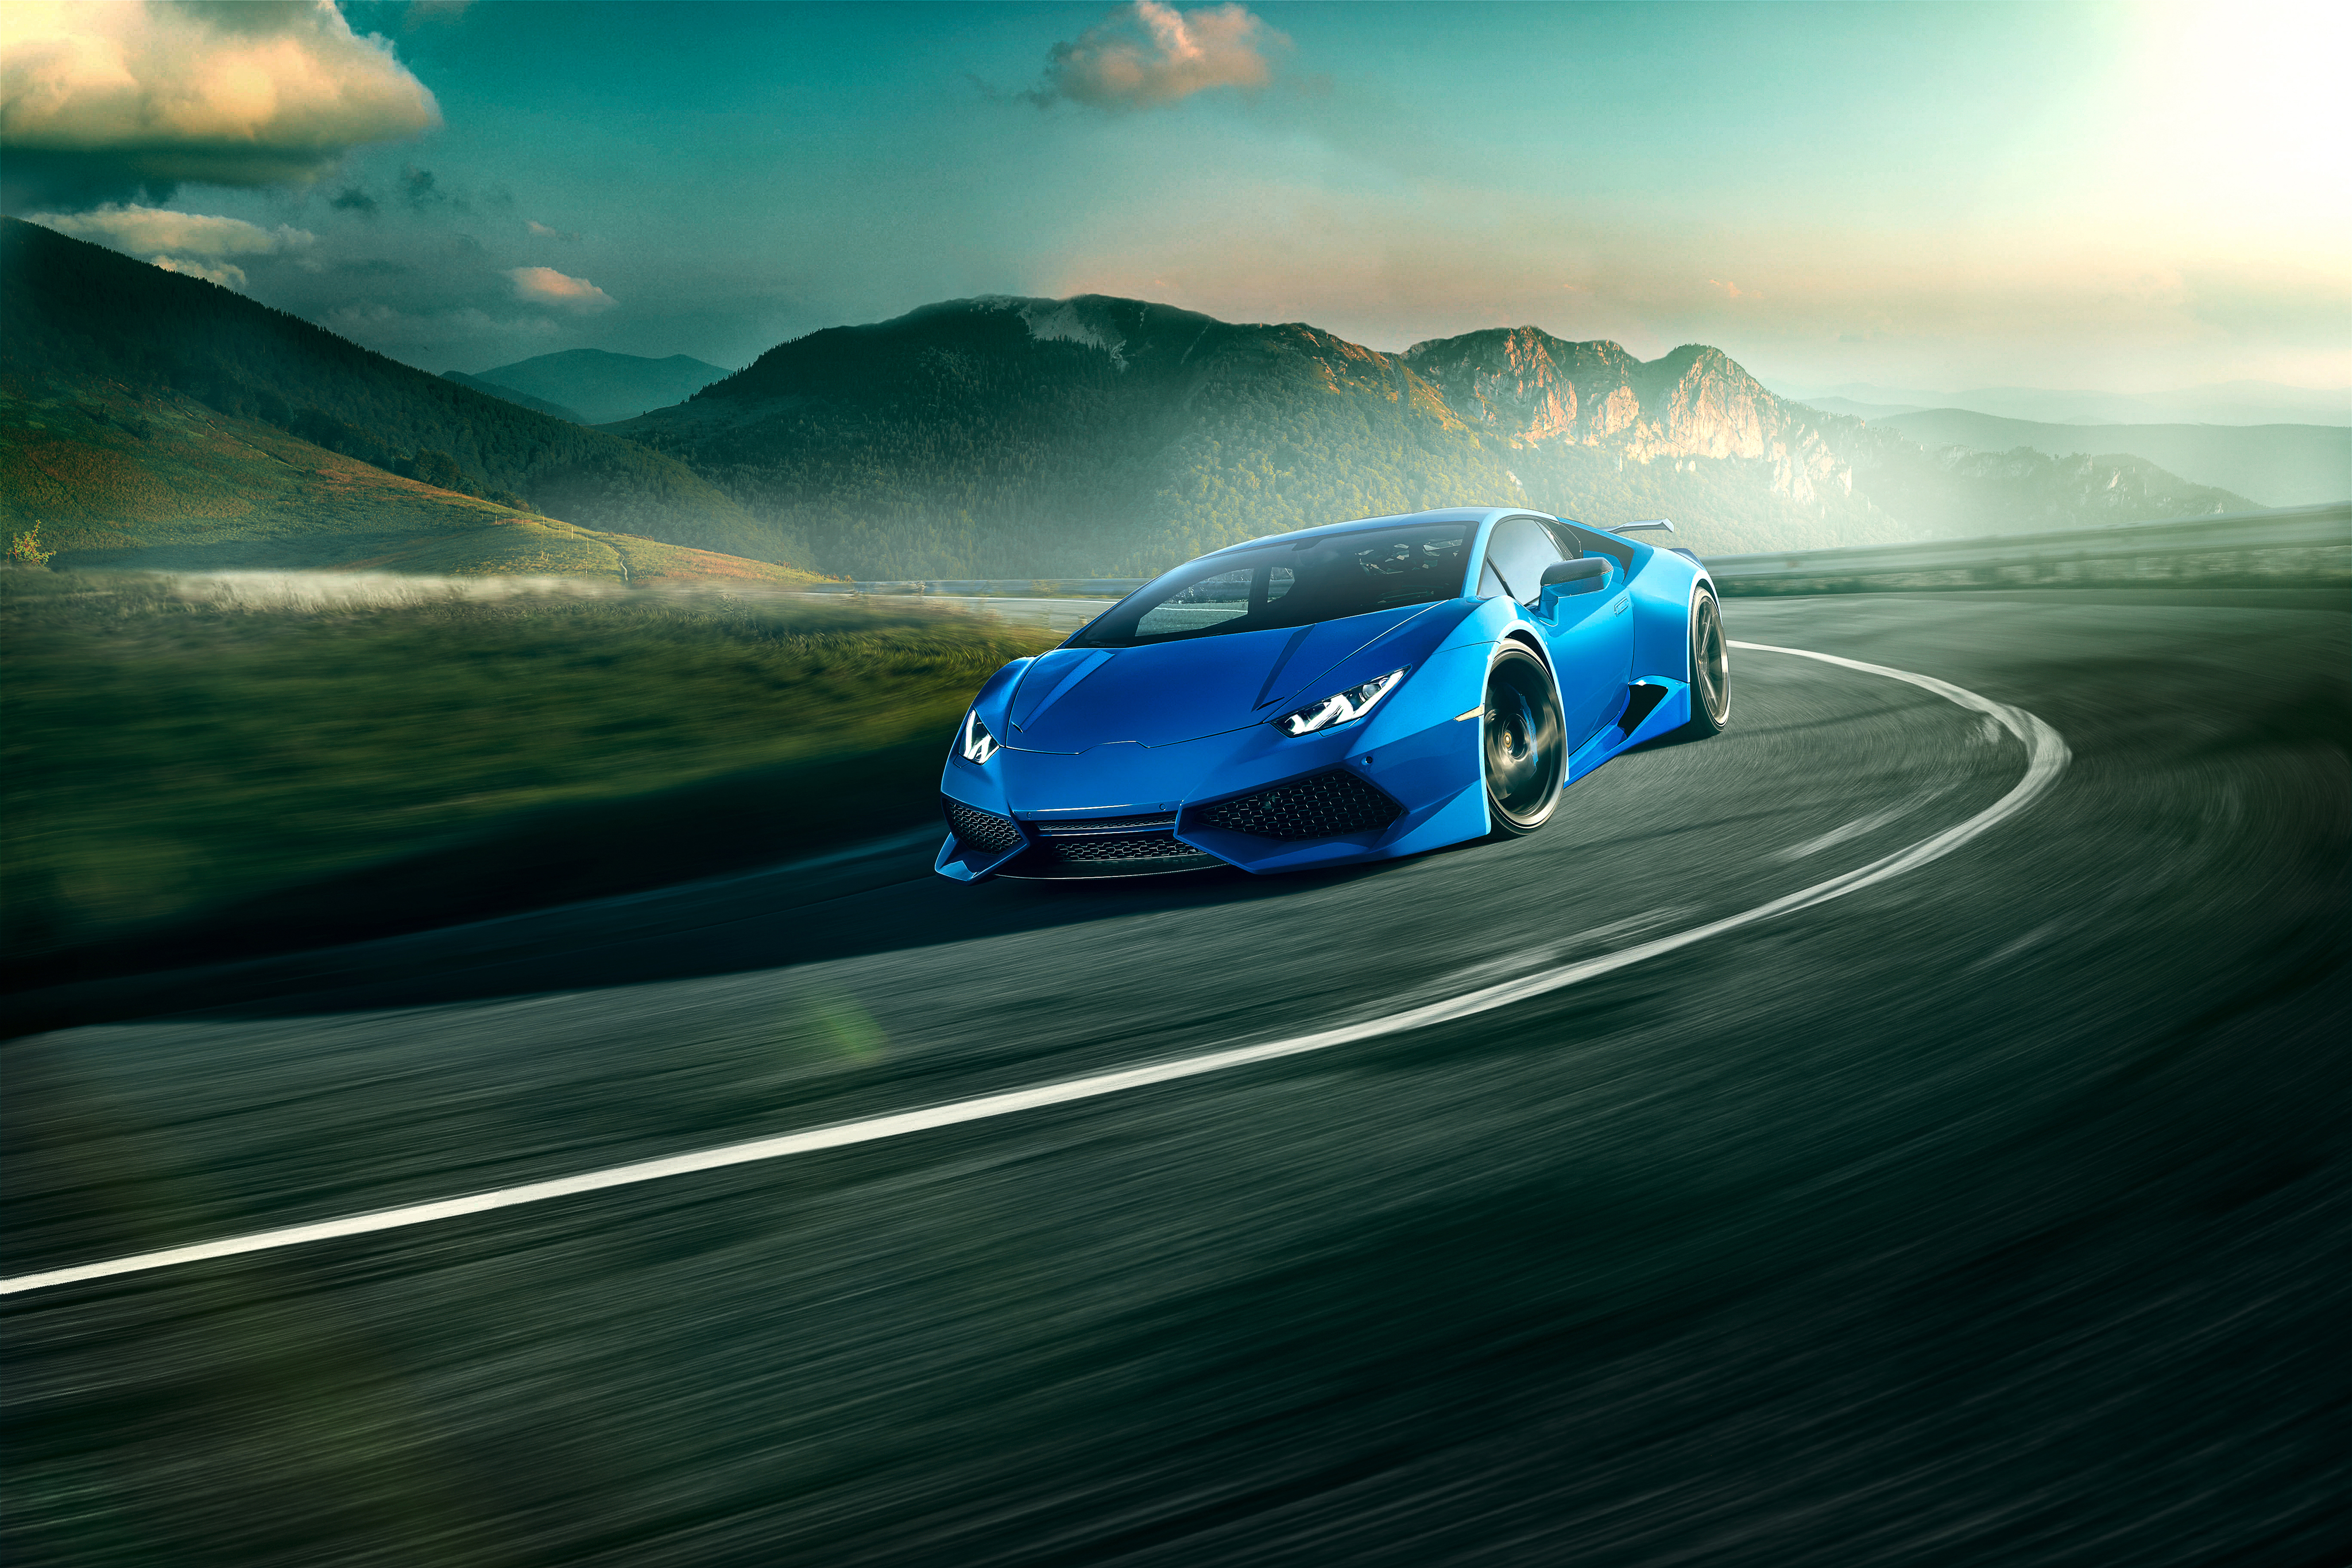 Baixe gratuitamente a imagem Lamborghini, Carro, Super Carro, Veículos, Lamborghini Huracán na área de trabalho do seu PC